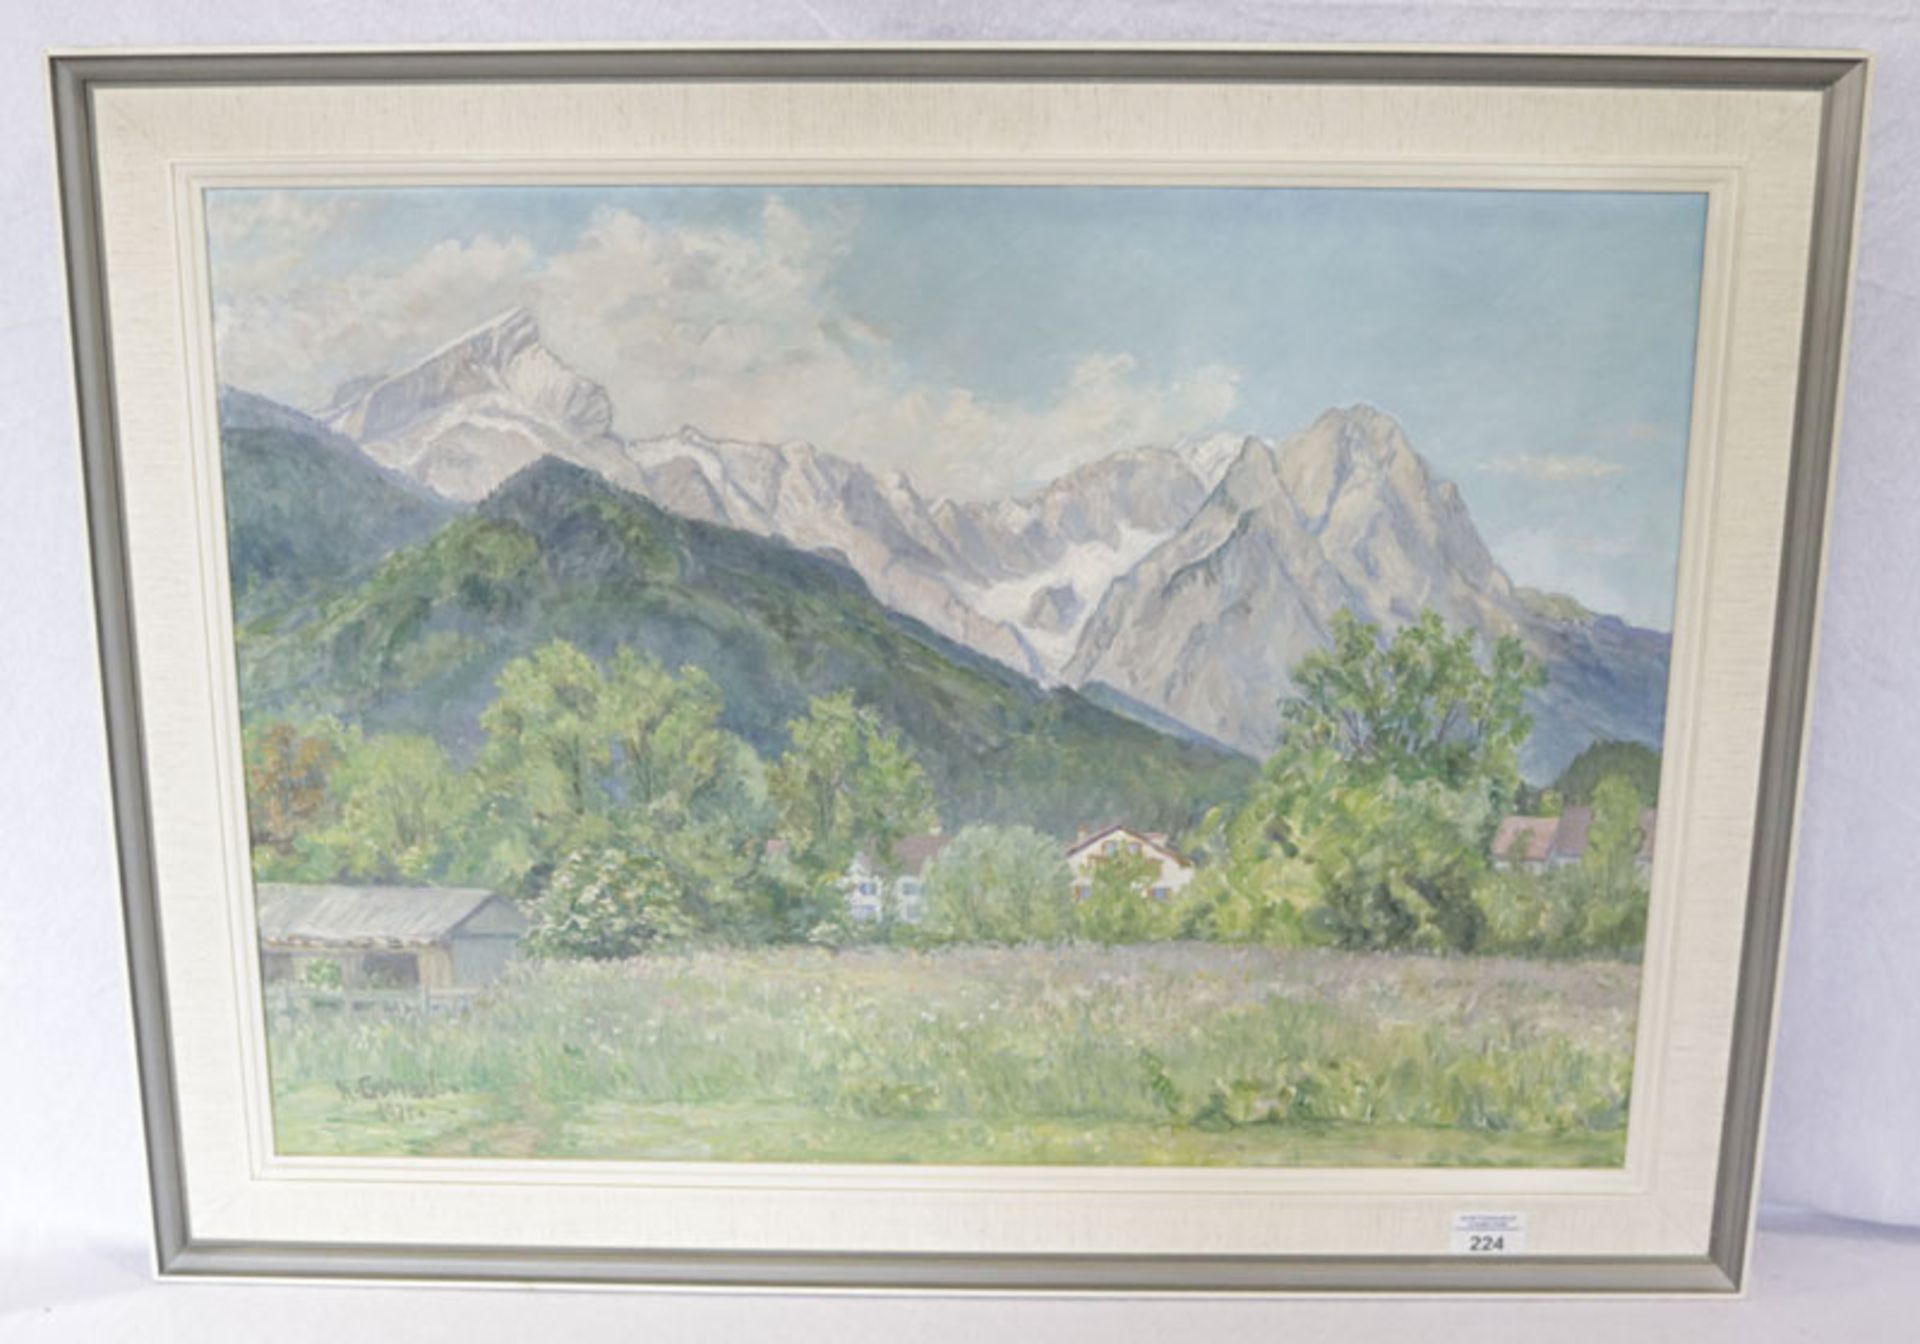 Gemälde ÖL/LW 'Garmisch vor Wettersteingebirge', signiert K. Günzel, datiert 71, Käthe, * 14.11.1896